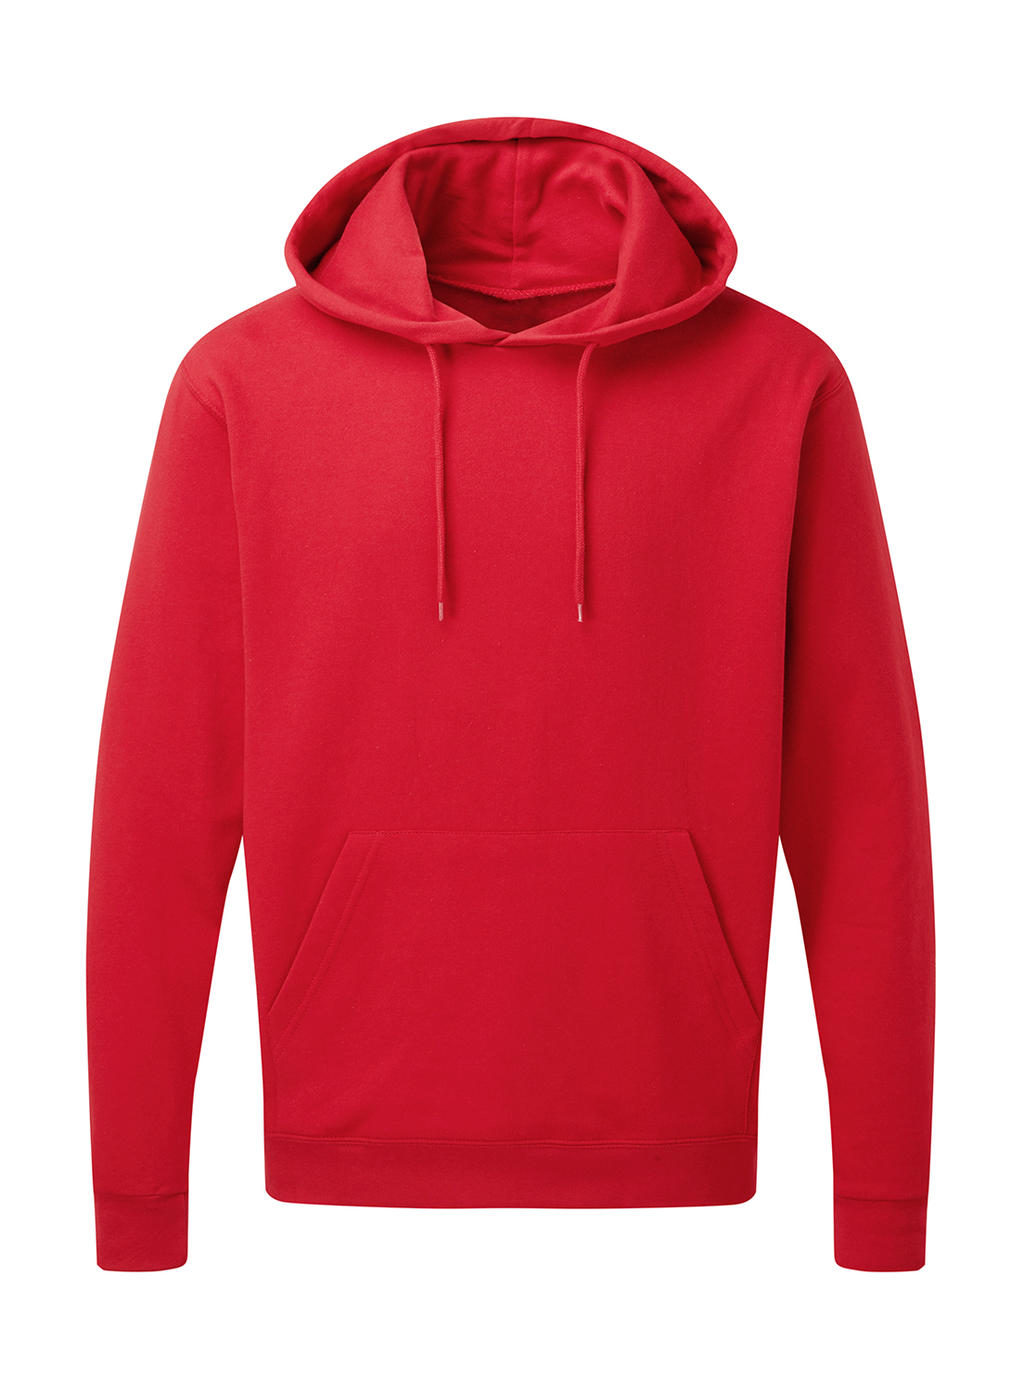  Mens Hooded Sweatshirt in Farbe Red